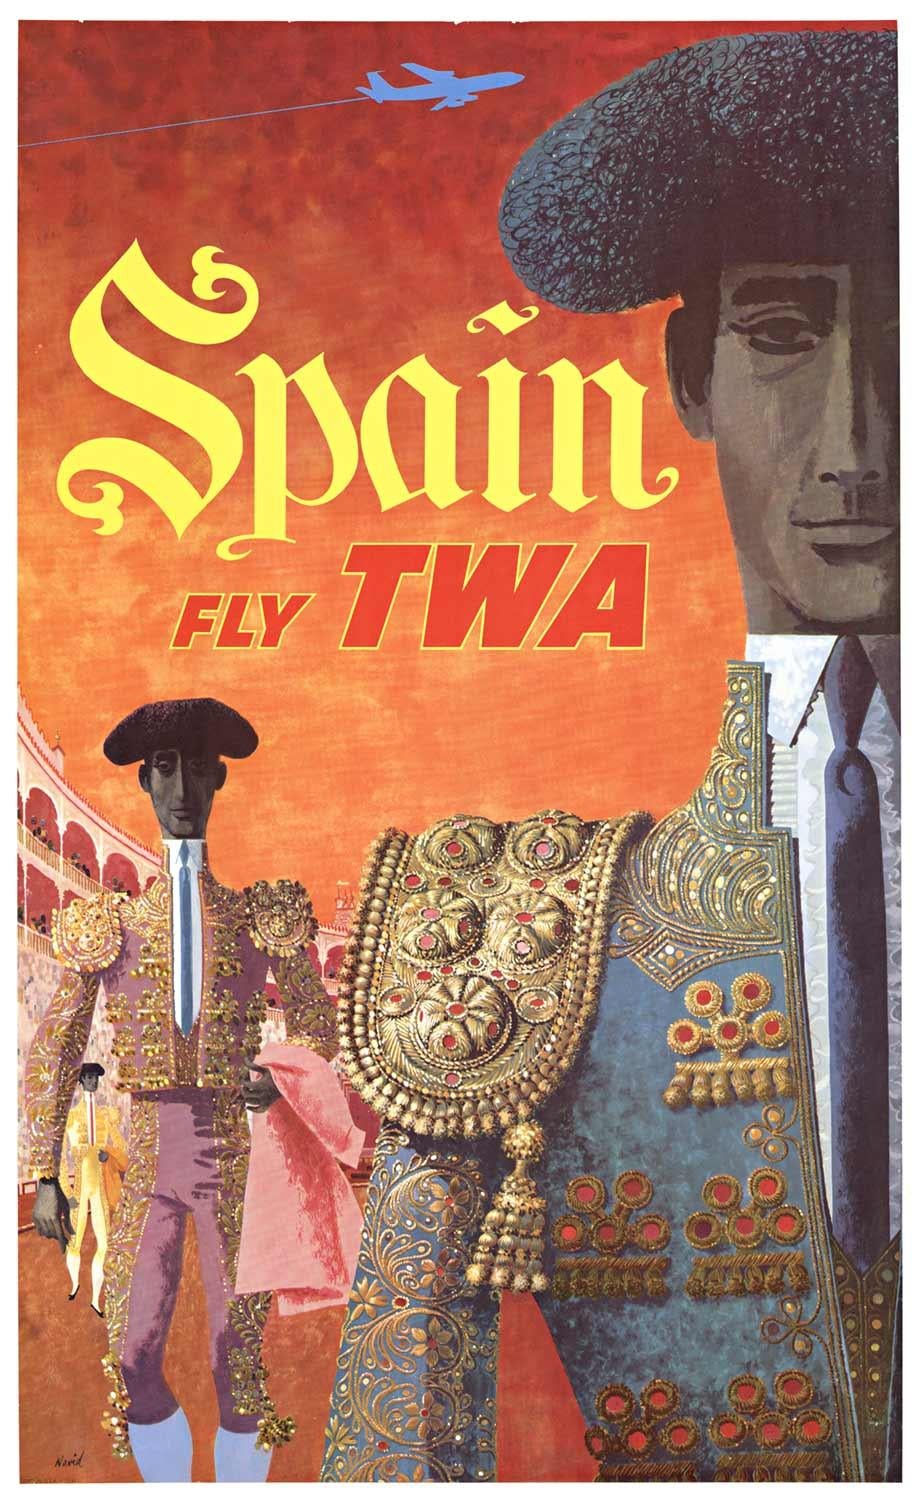 Original "Spain Fly TWA" vintage airline travel poster  Matador image